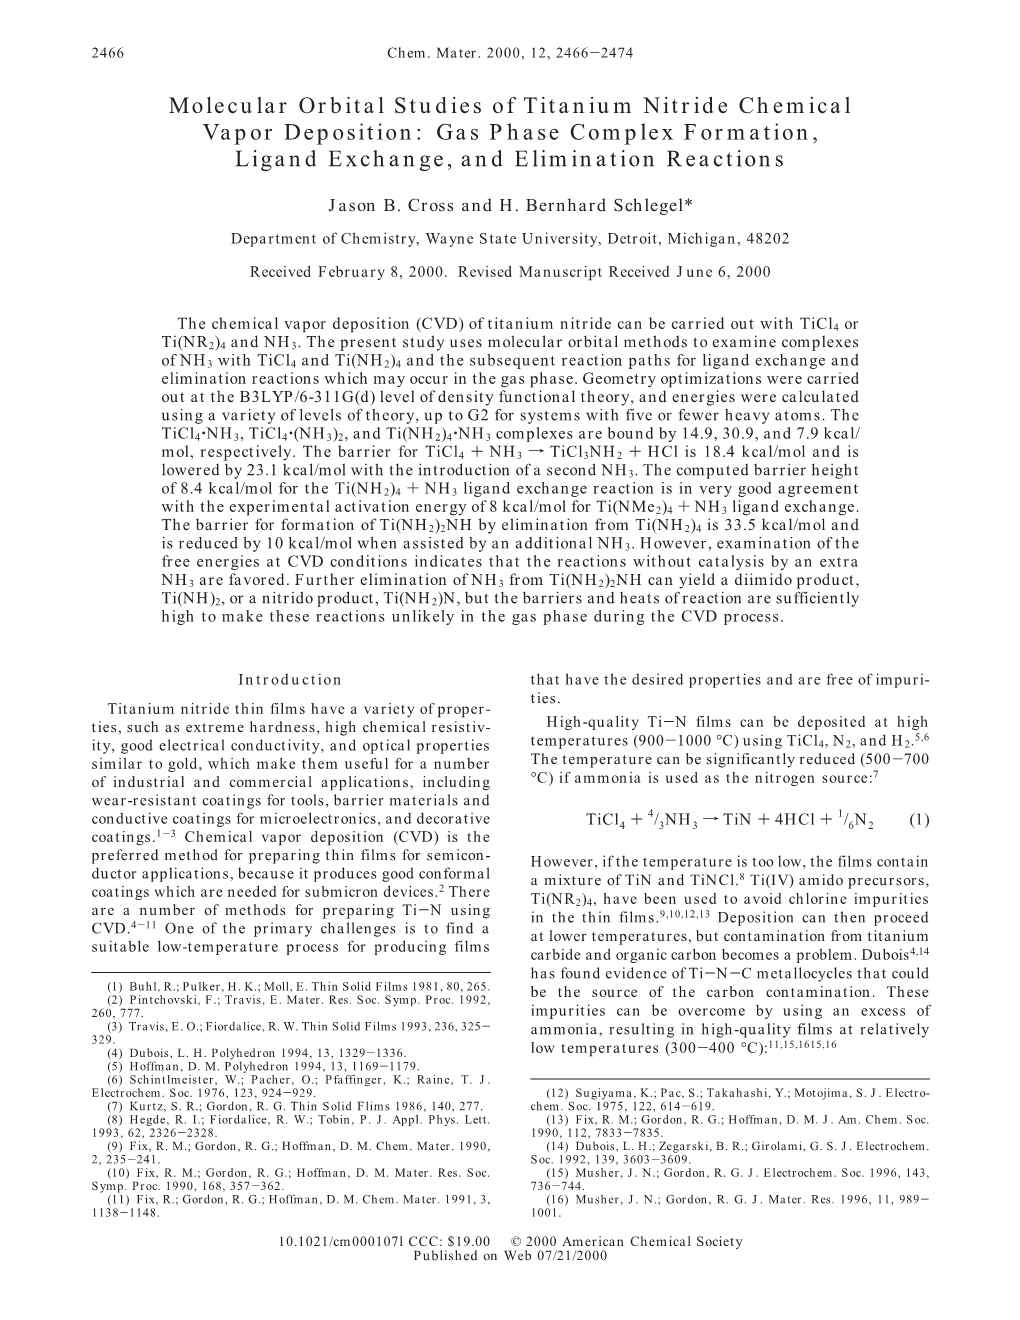 Molecular Orbital Studies of Titanium Nitride Chemical Vapor Deposition: Gas Phase Complex Formation, Ligand Exchange, and Elimination Reactions